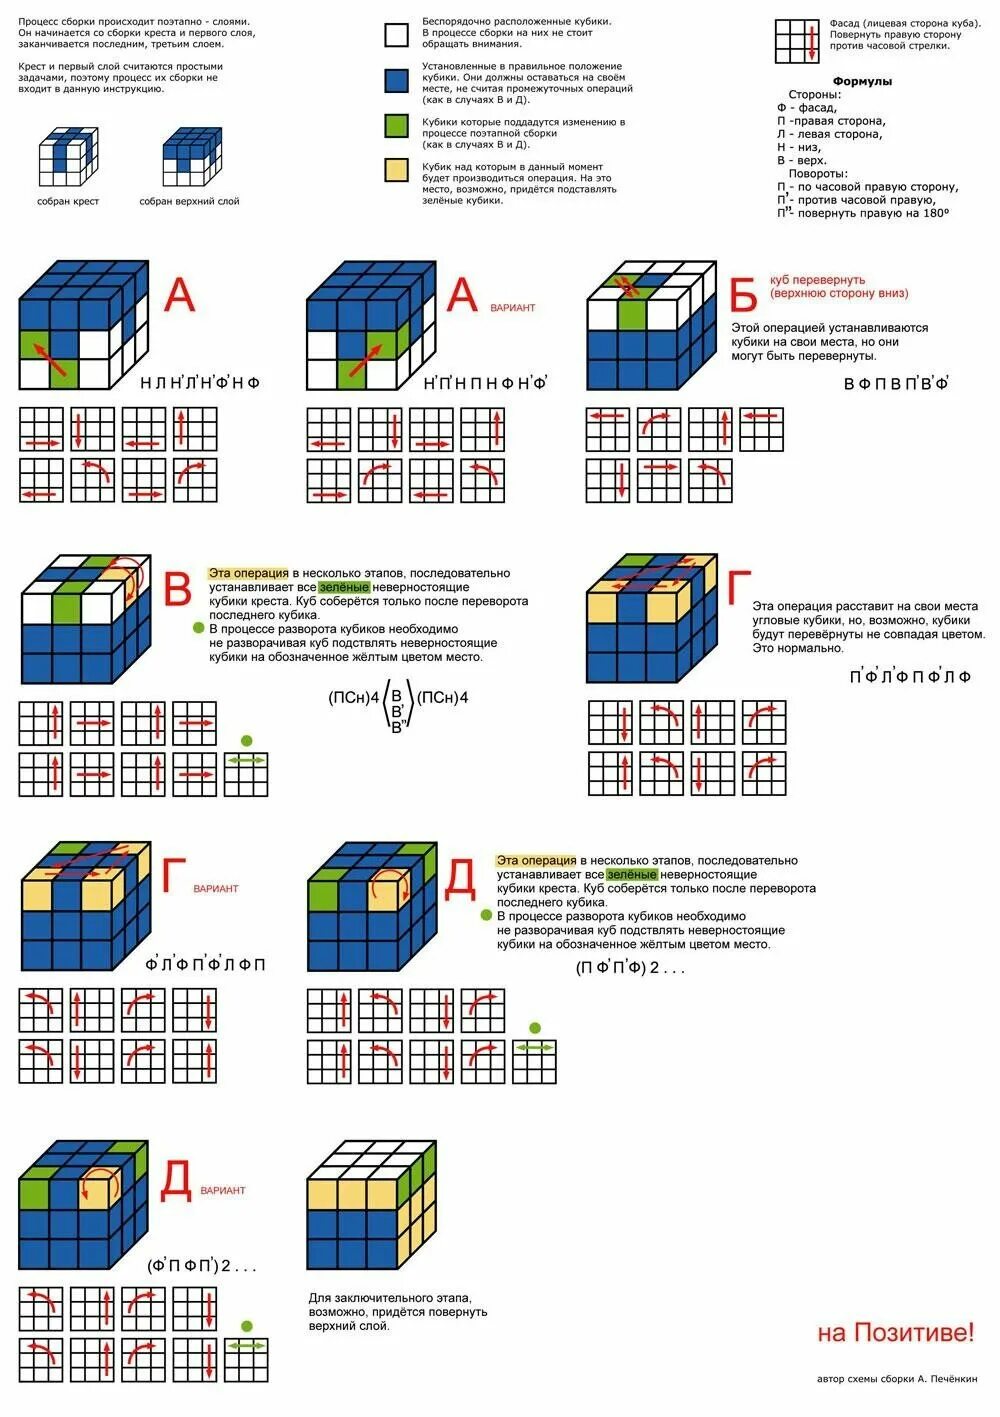 Сборка кубика 3 слой. Схема сбора кубика Рубика 3х3 для начинающих. Схема сборки кубика Рубика 3х3 первый слой. Схема сбора кубика Рубика 3х3. Схема сборки кубика Рубика 3х3 третий слой.